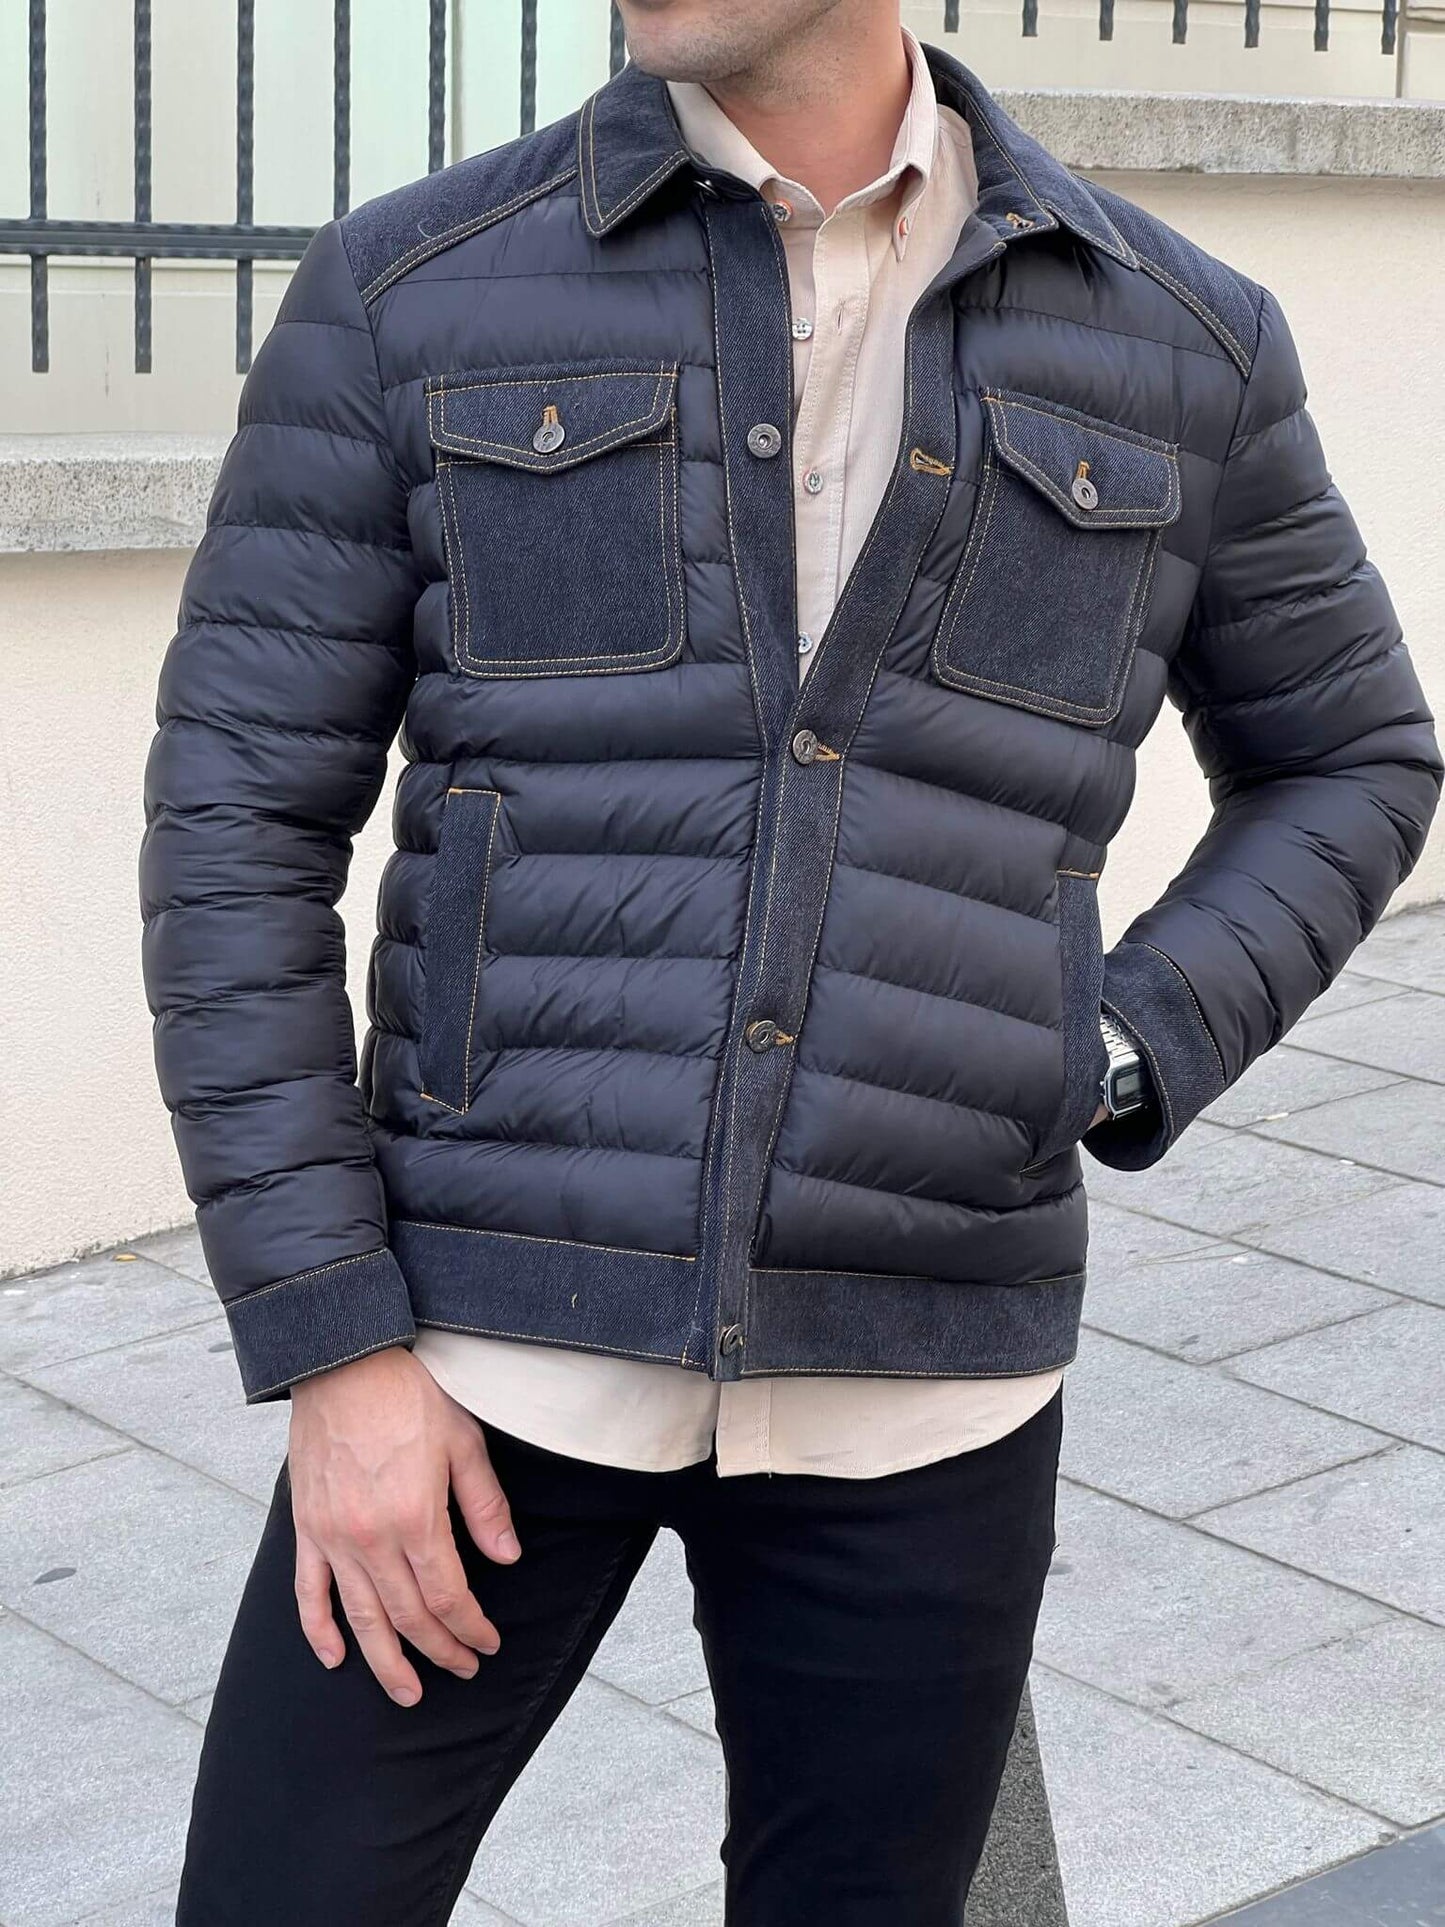 Stylish male model confidently wears a sleek black denim coat, exuding urban cool vibes.